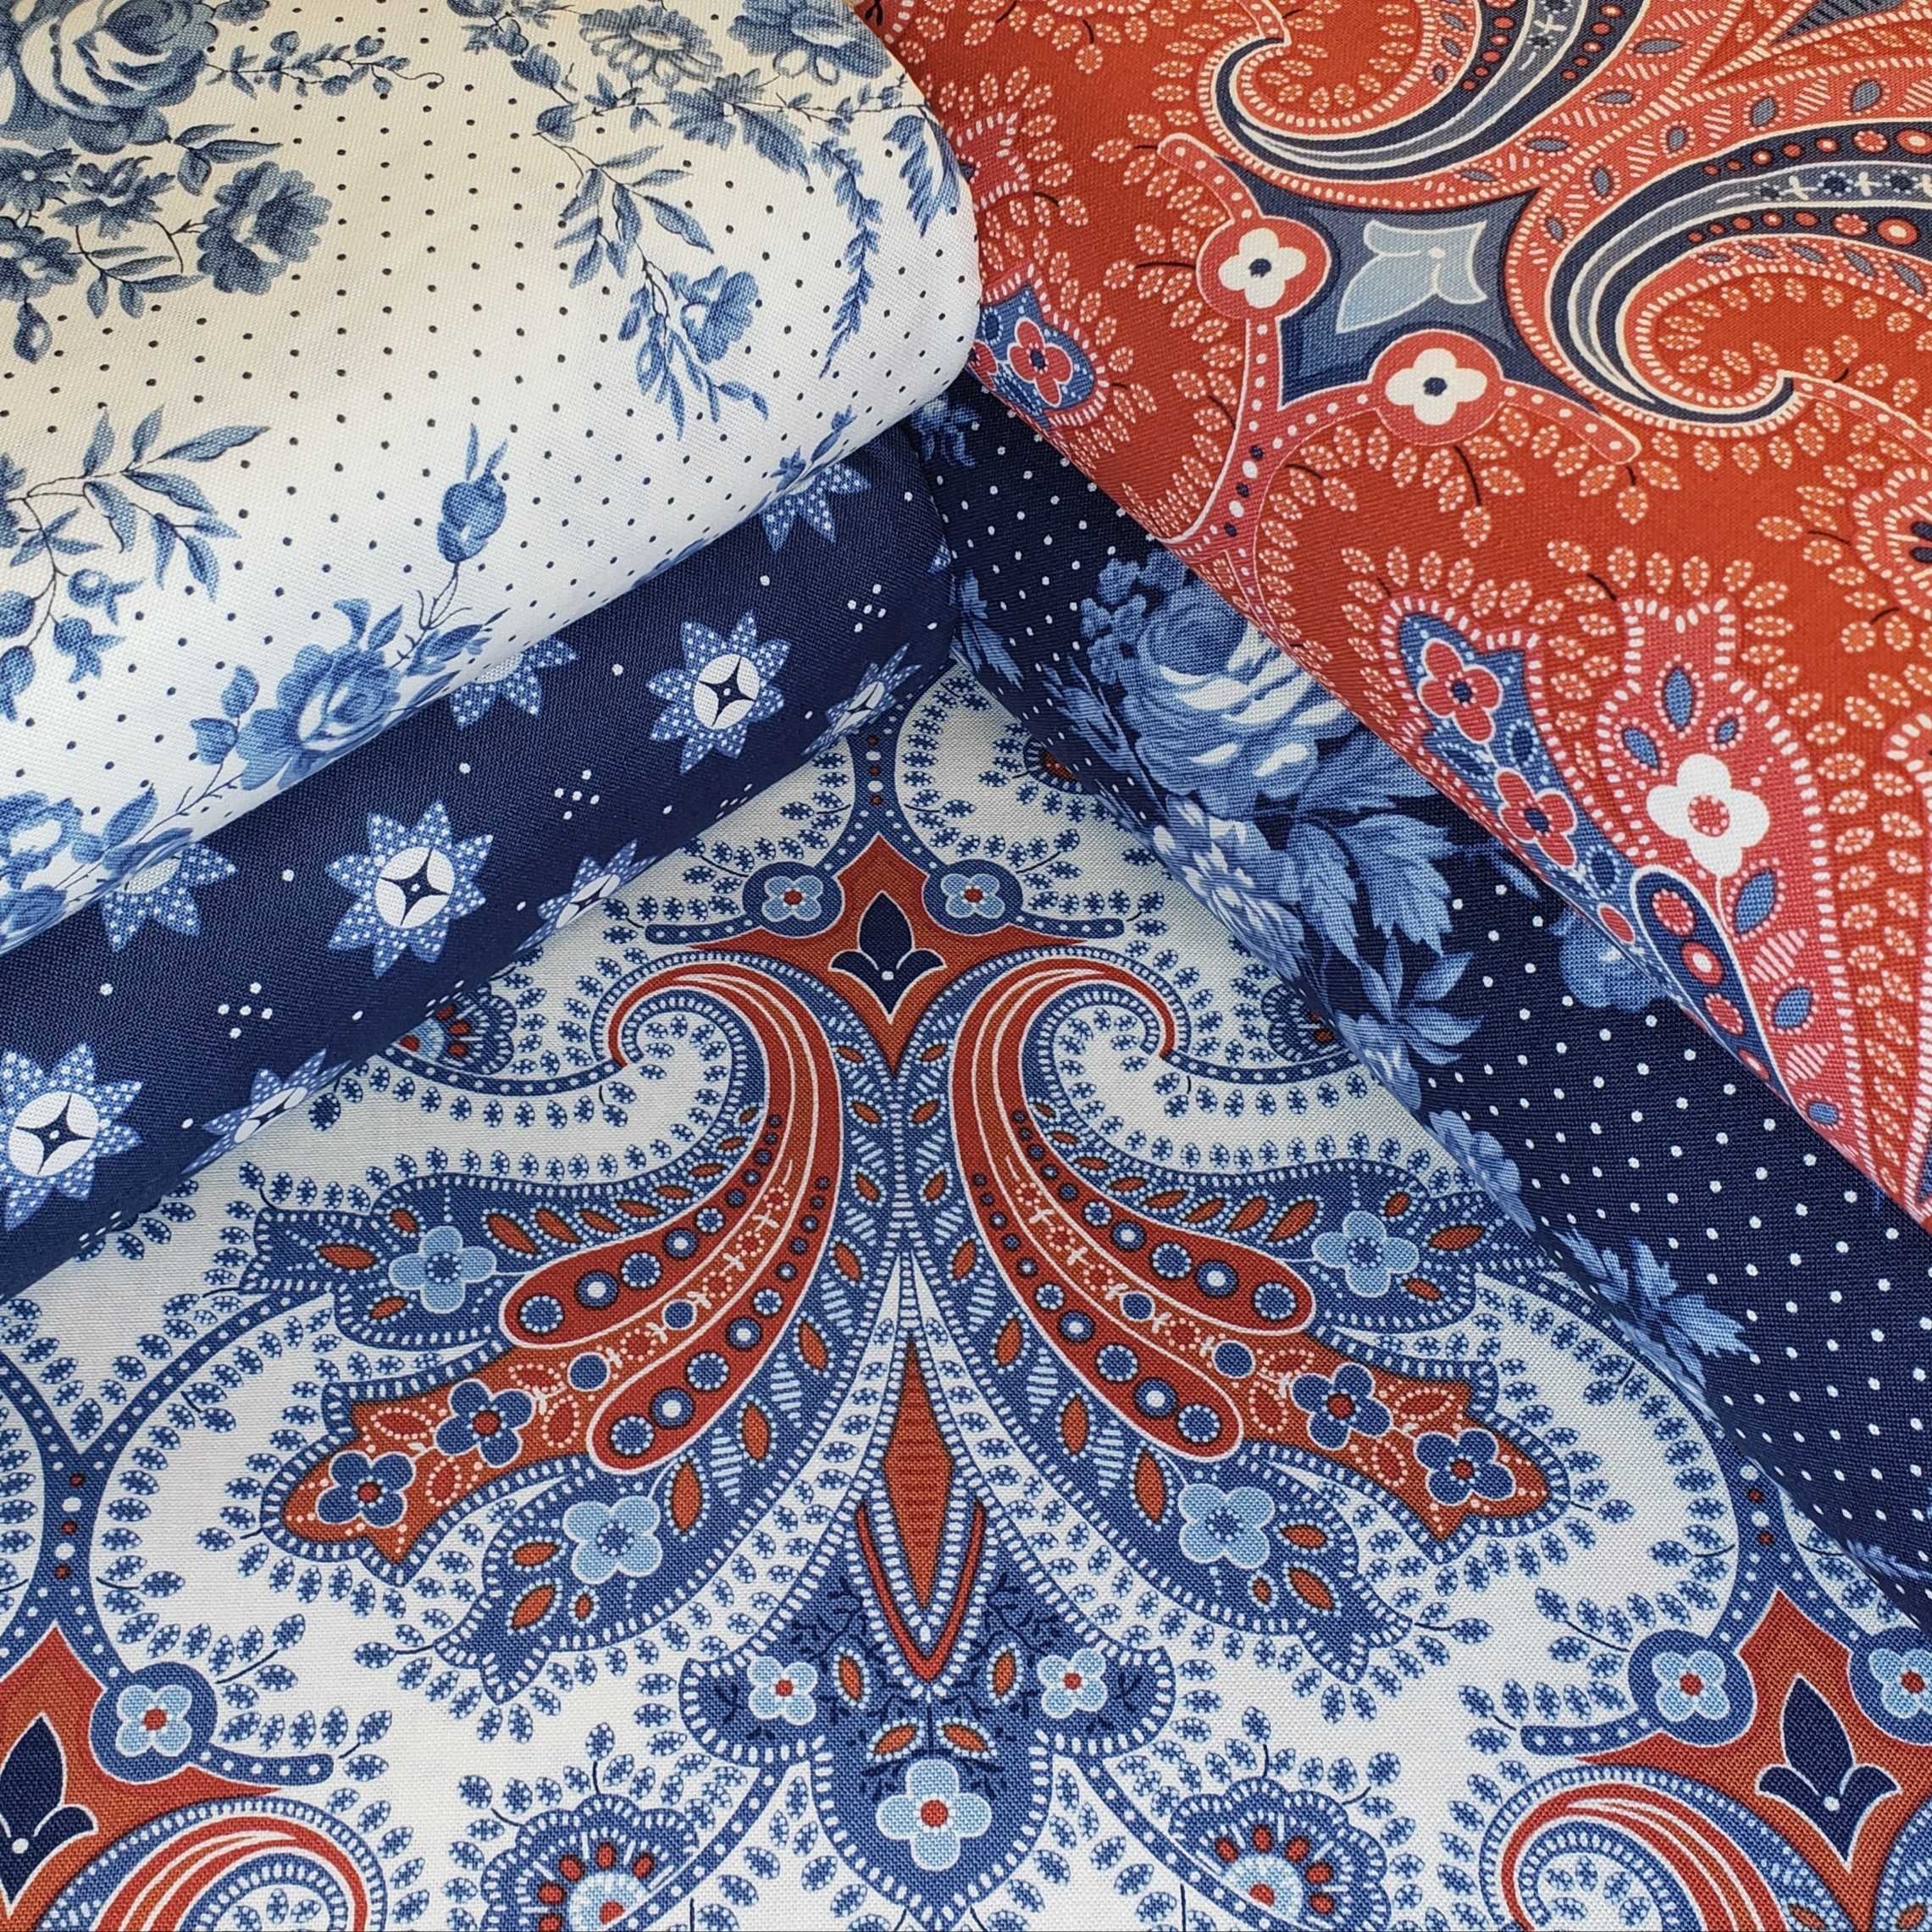 Bandana Blaze Orange Paisley, 100% Quilt Cotton, Fabric by the Yard -   Hong Kong